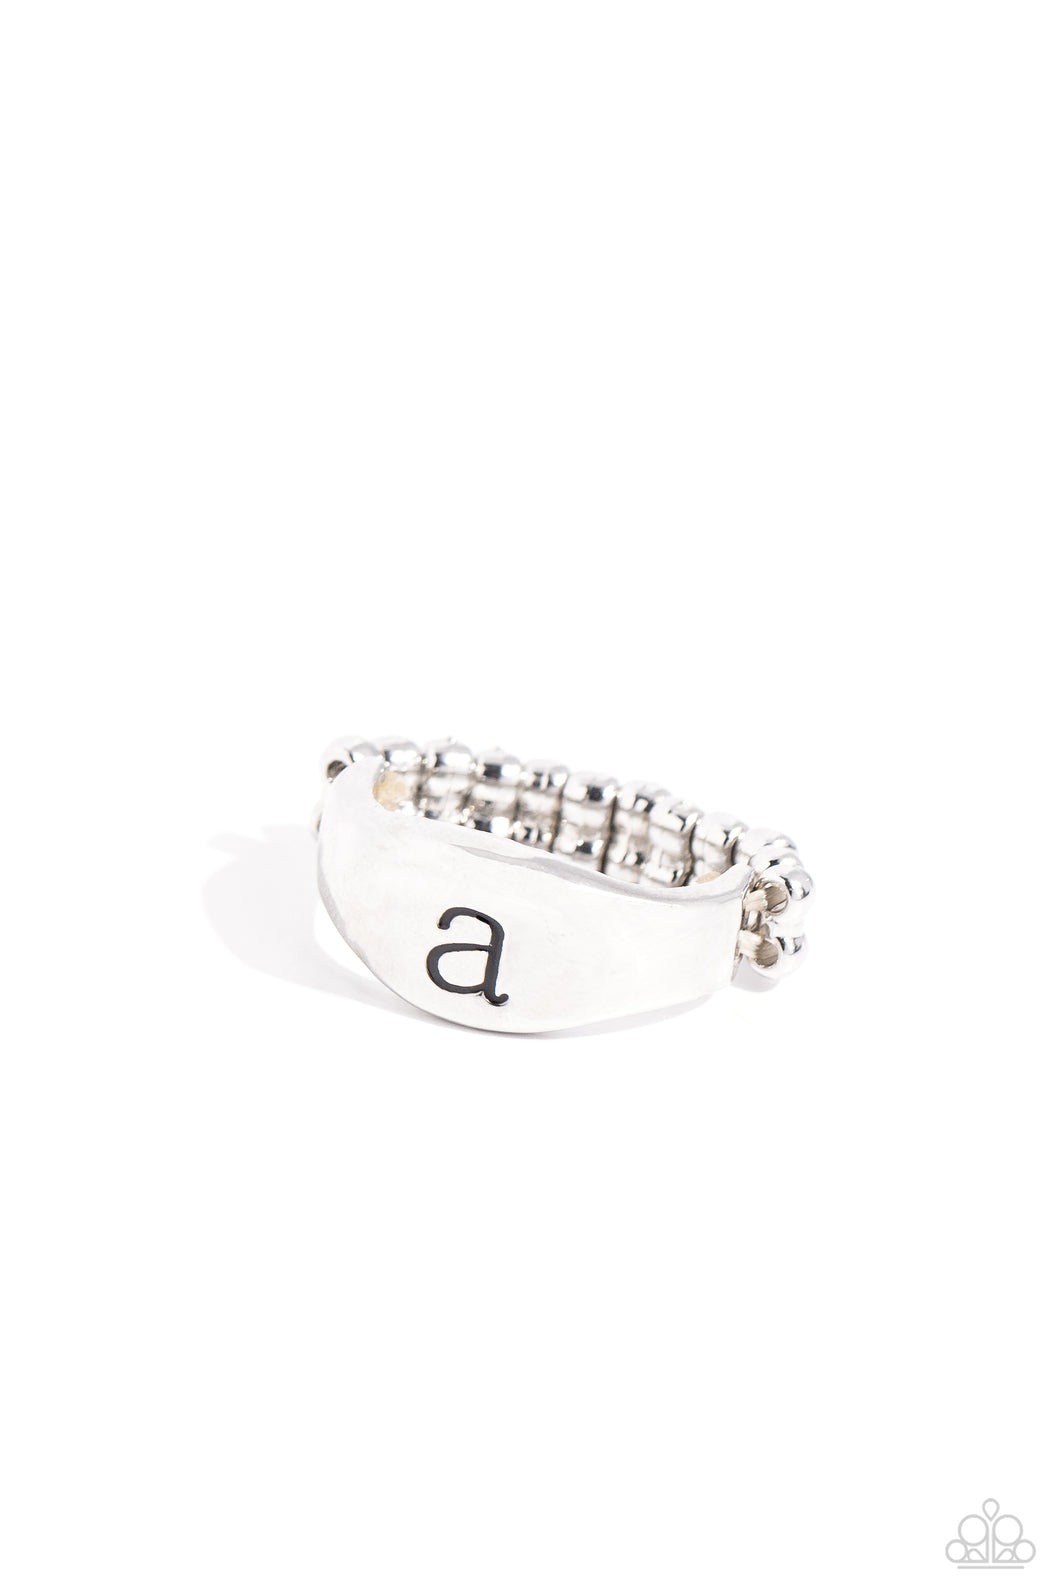 Monogram Memento - A - Silver Initial Ring